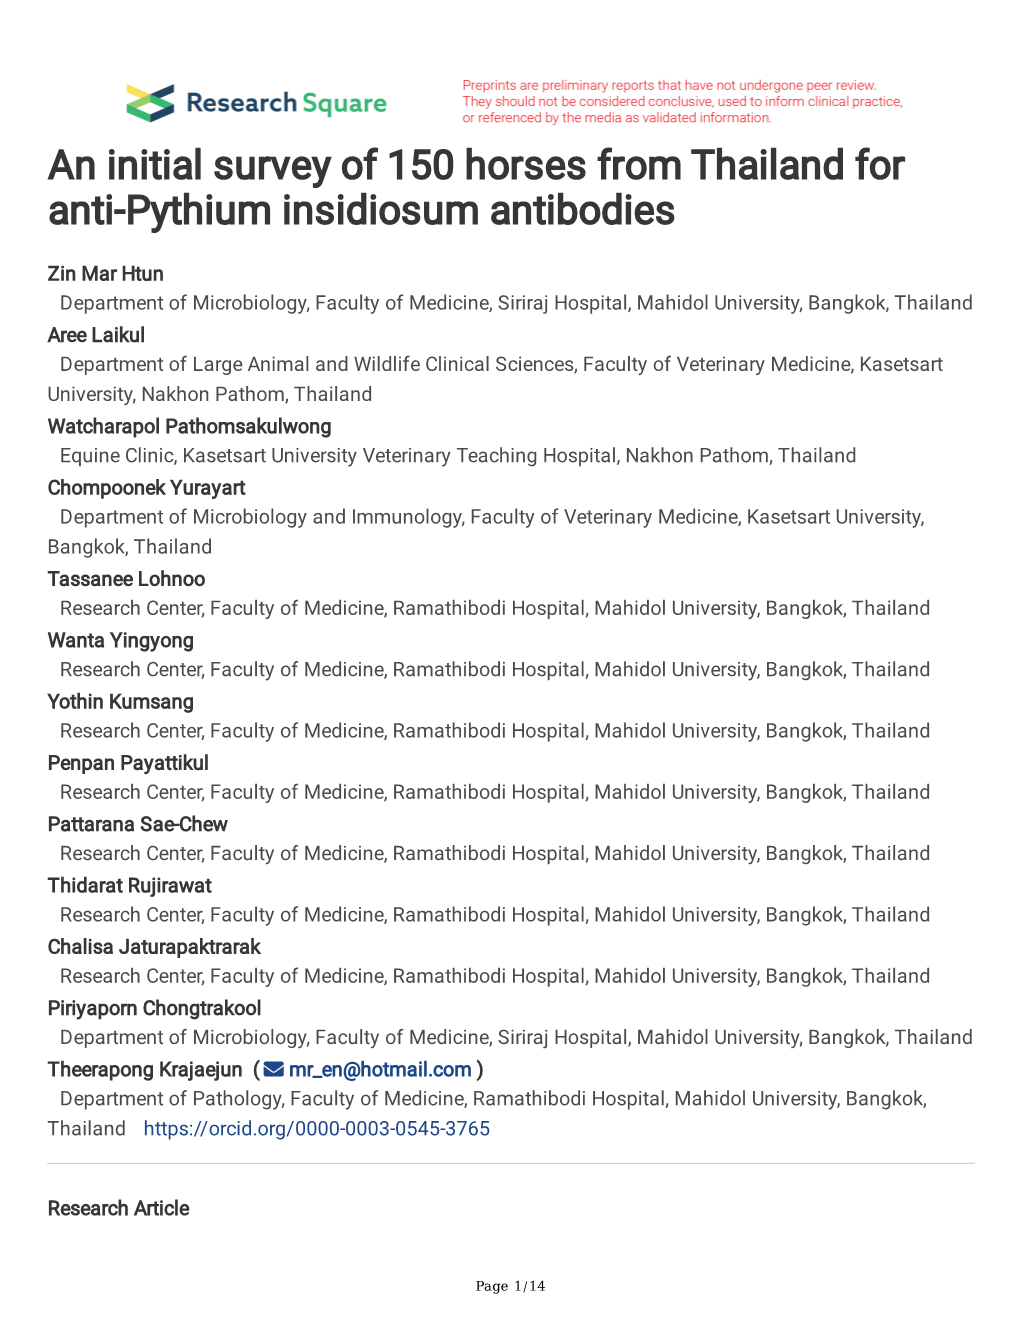 An Initial Survey of 150 Horses from Thailand for Anti-Pythium Insidiosum Antibodies